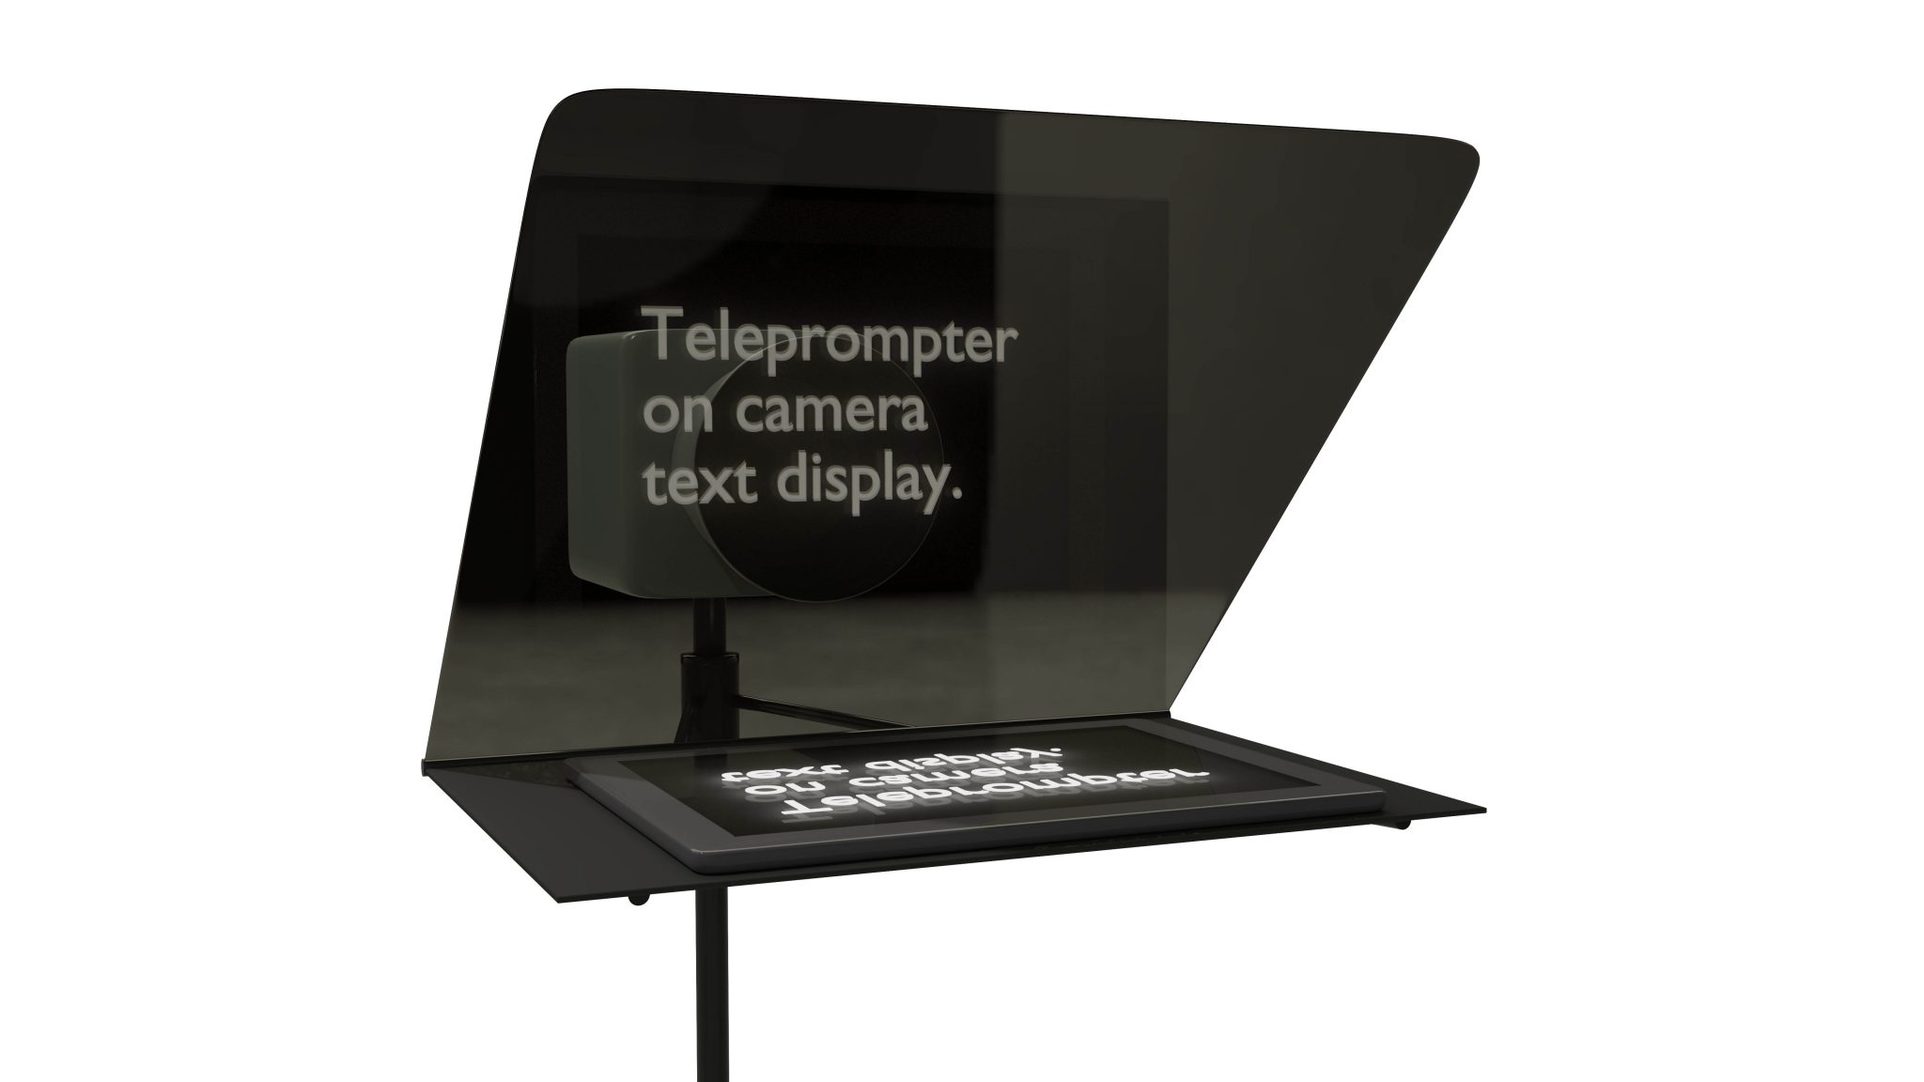 teleprompter for windows